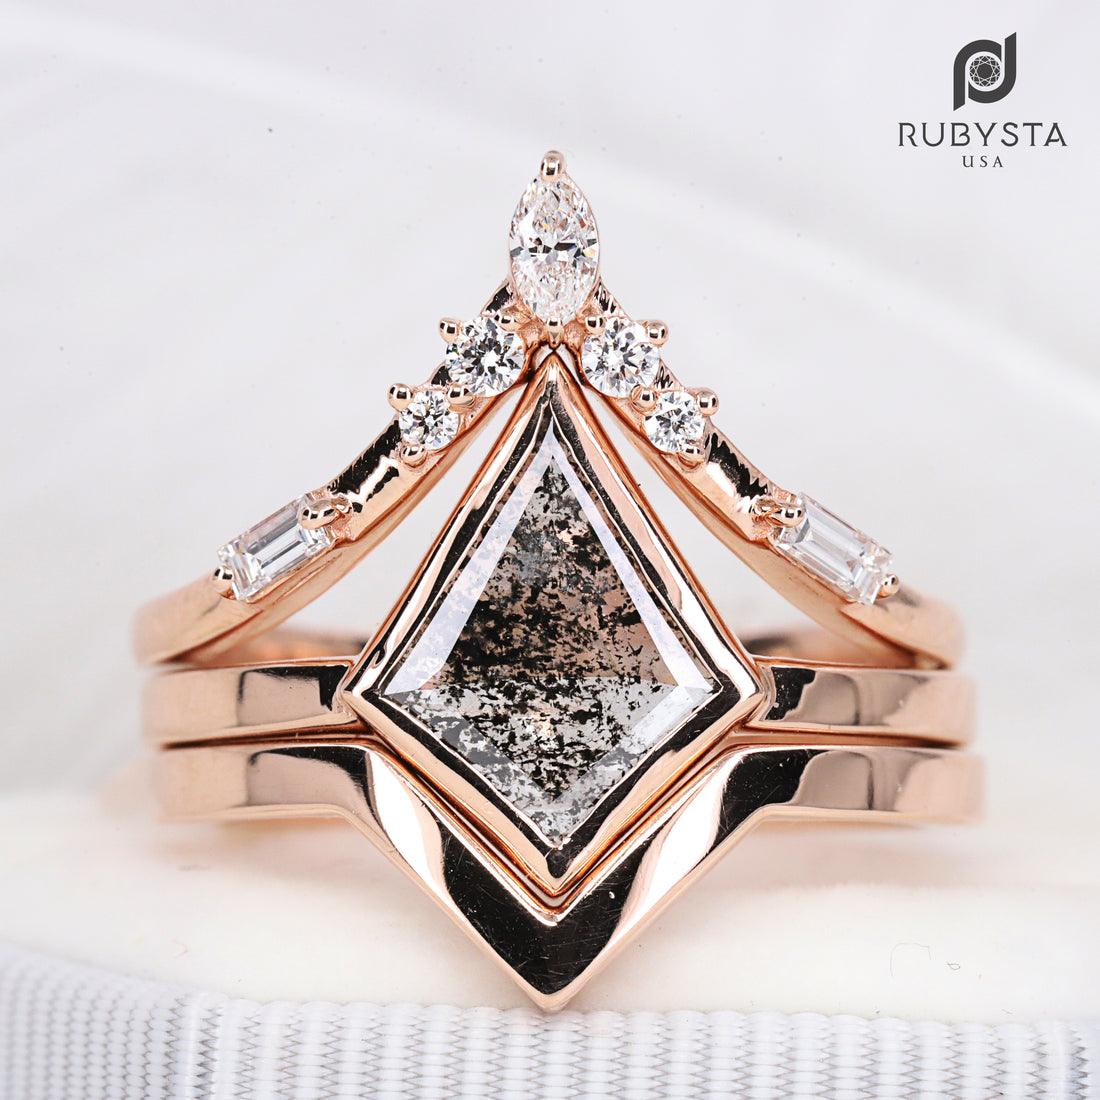 Salt and Pepper Diamond Ring | Kite Engagement Ring | Wedding Ring - Rubysta